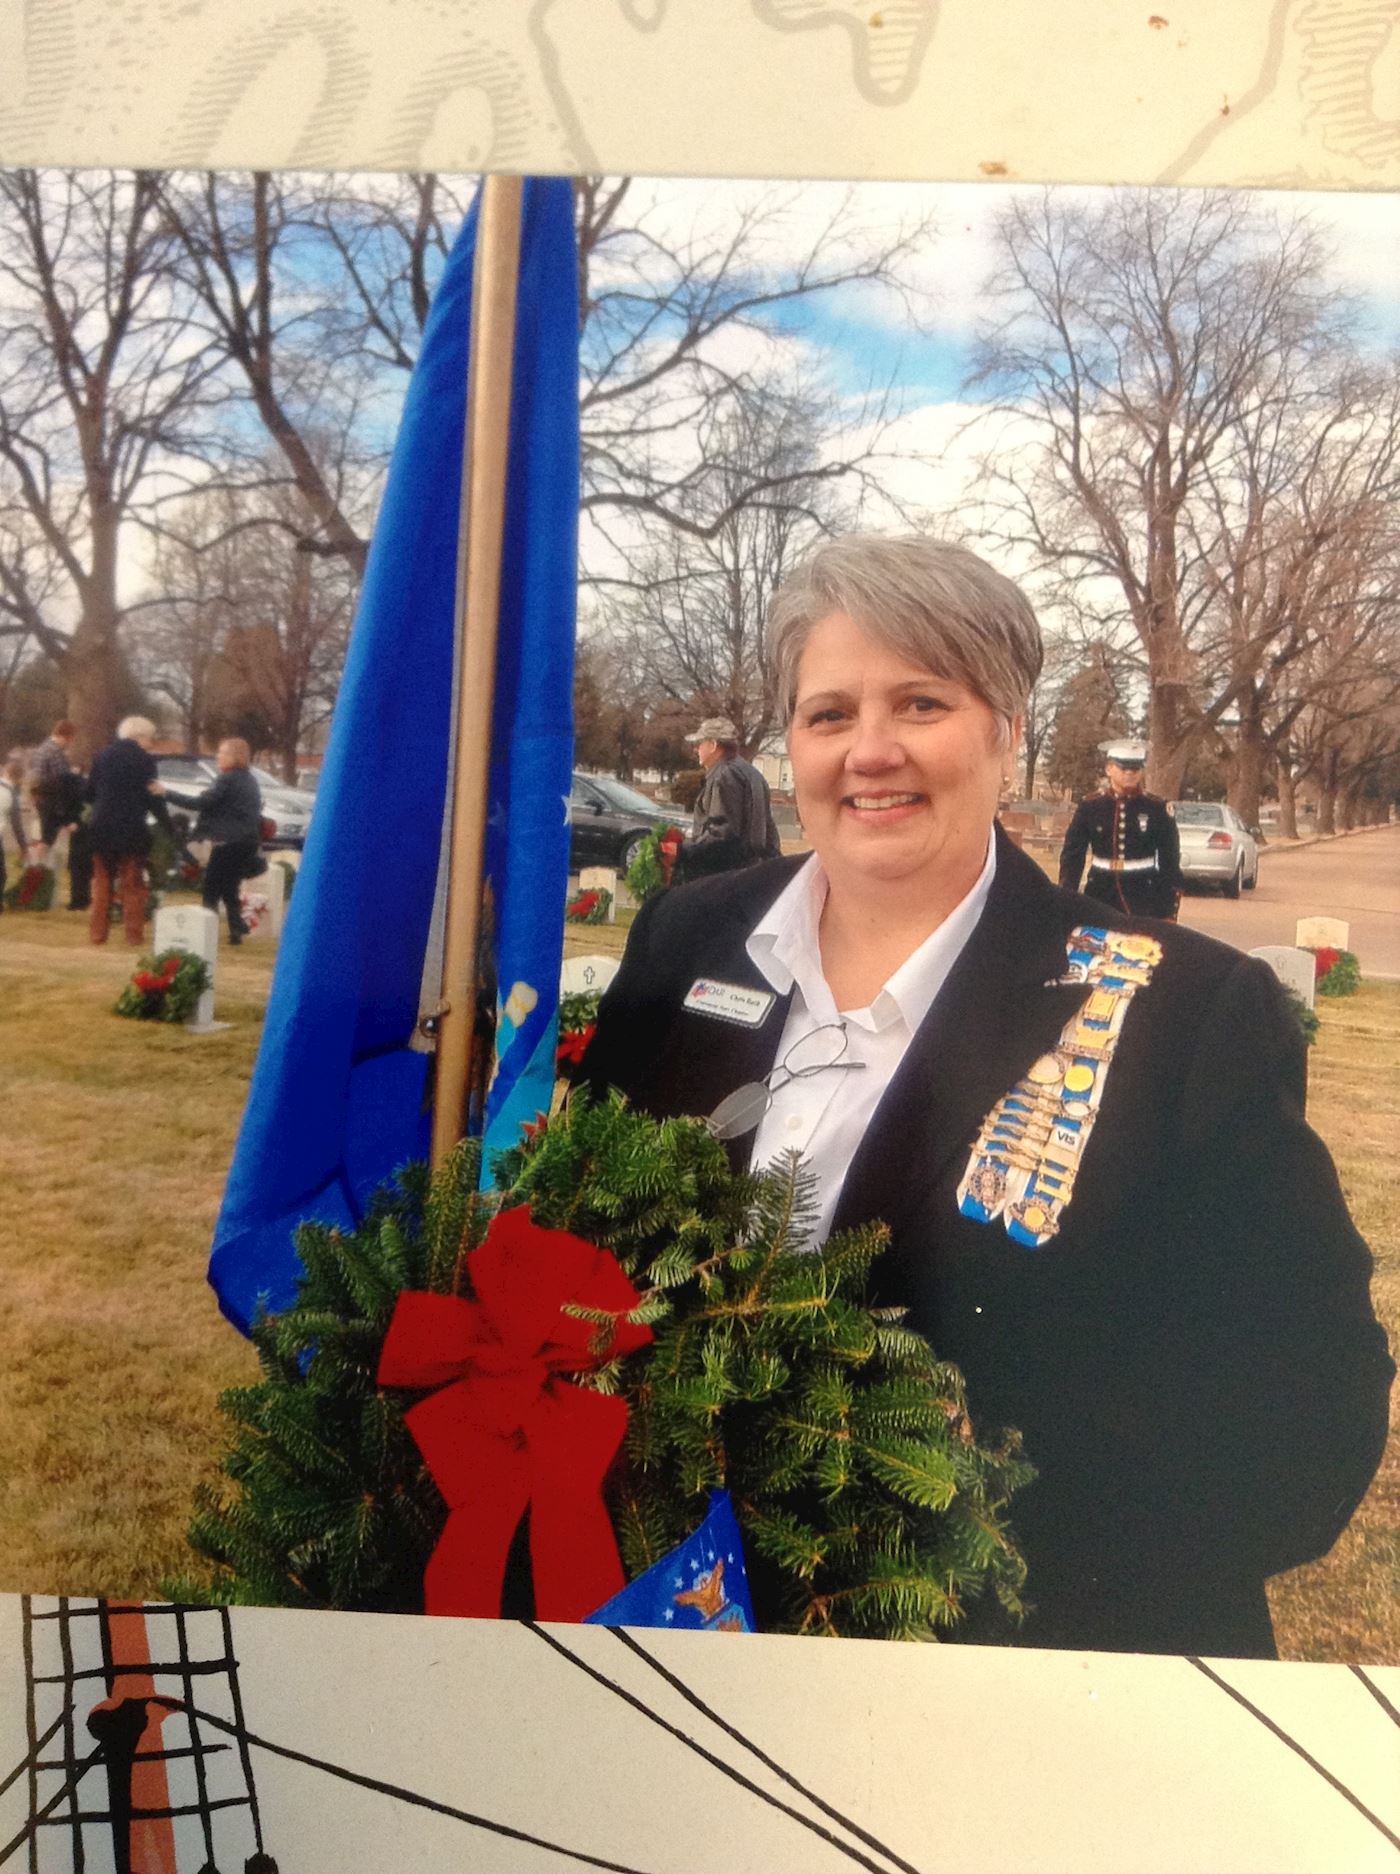 Wreaths Across America National Day of Rememberance 2014 - Chris Ruth - Coordinator Wreaths Across America at Linn Grove Cemetery